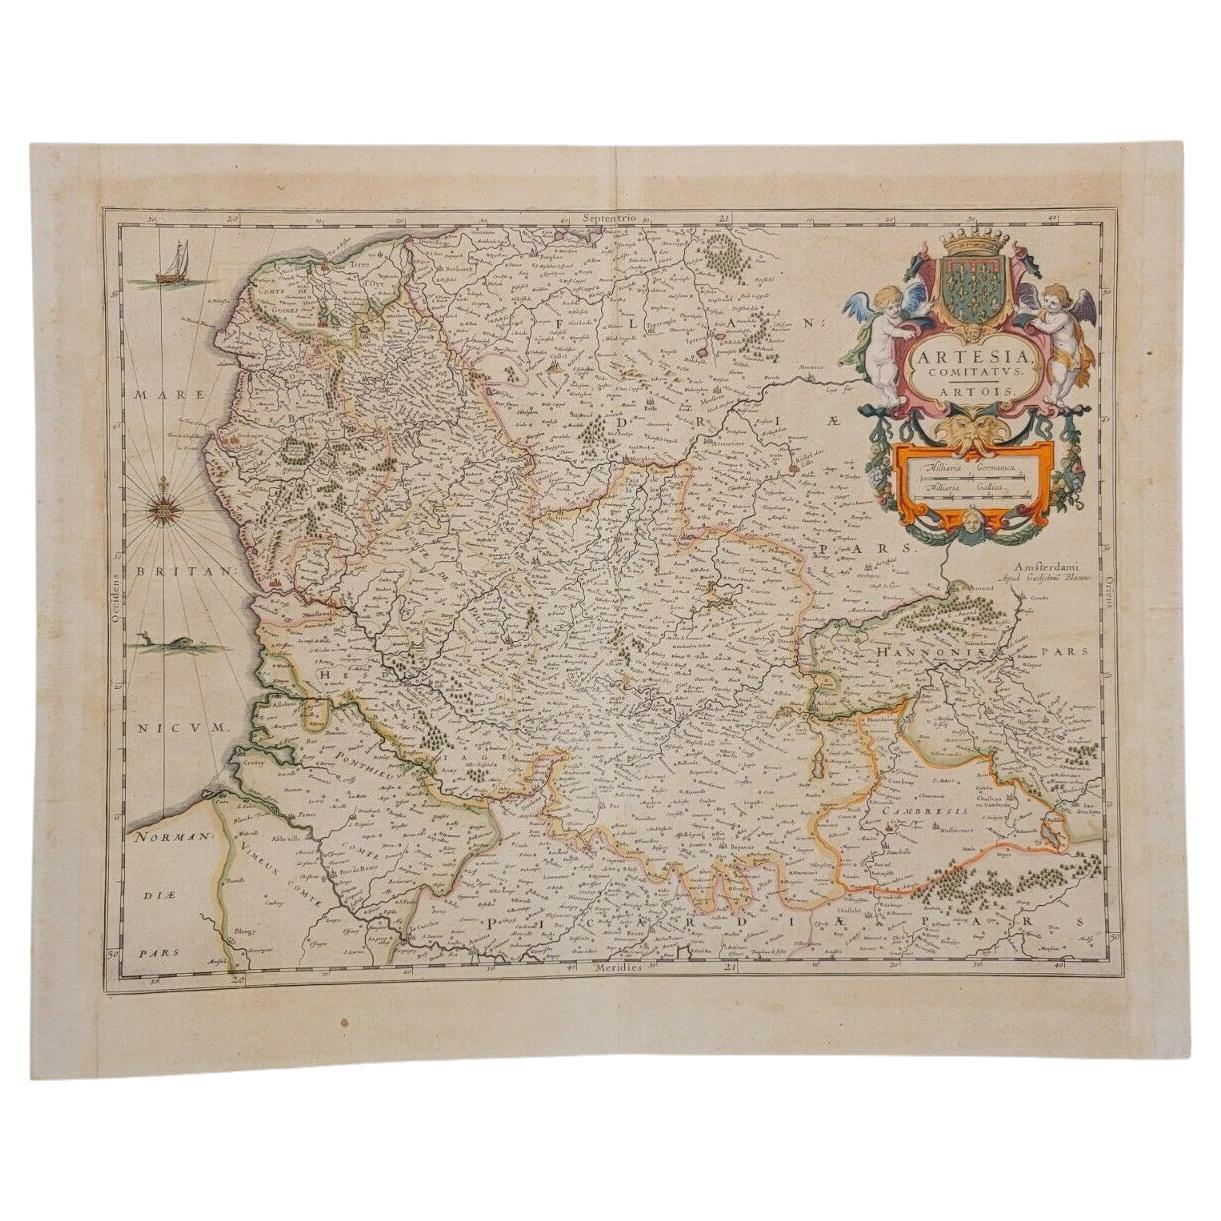 1620 Map of Artois Entitled "Artesia Comitatvs Artois, " by Bleau, Ric.a012 For Sale